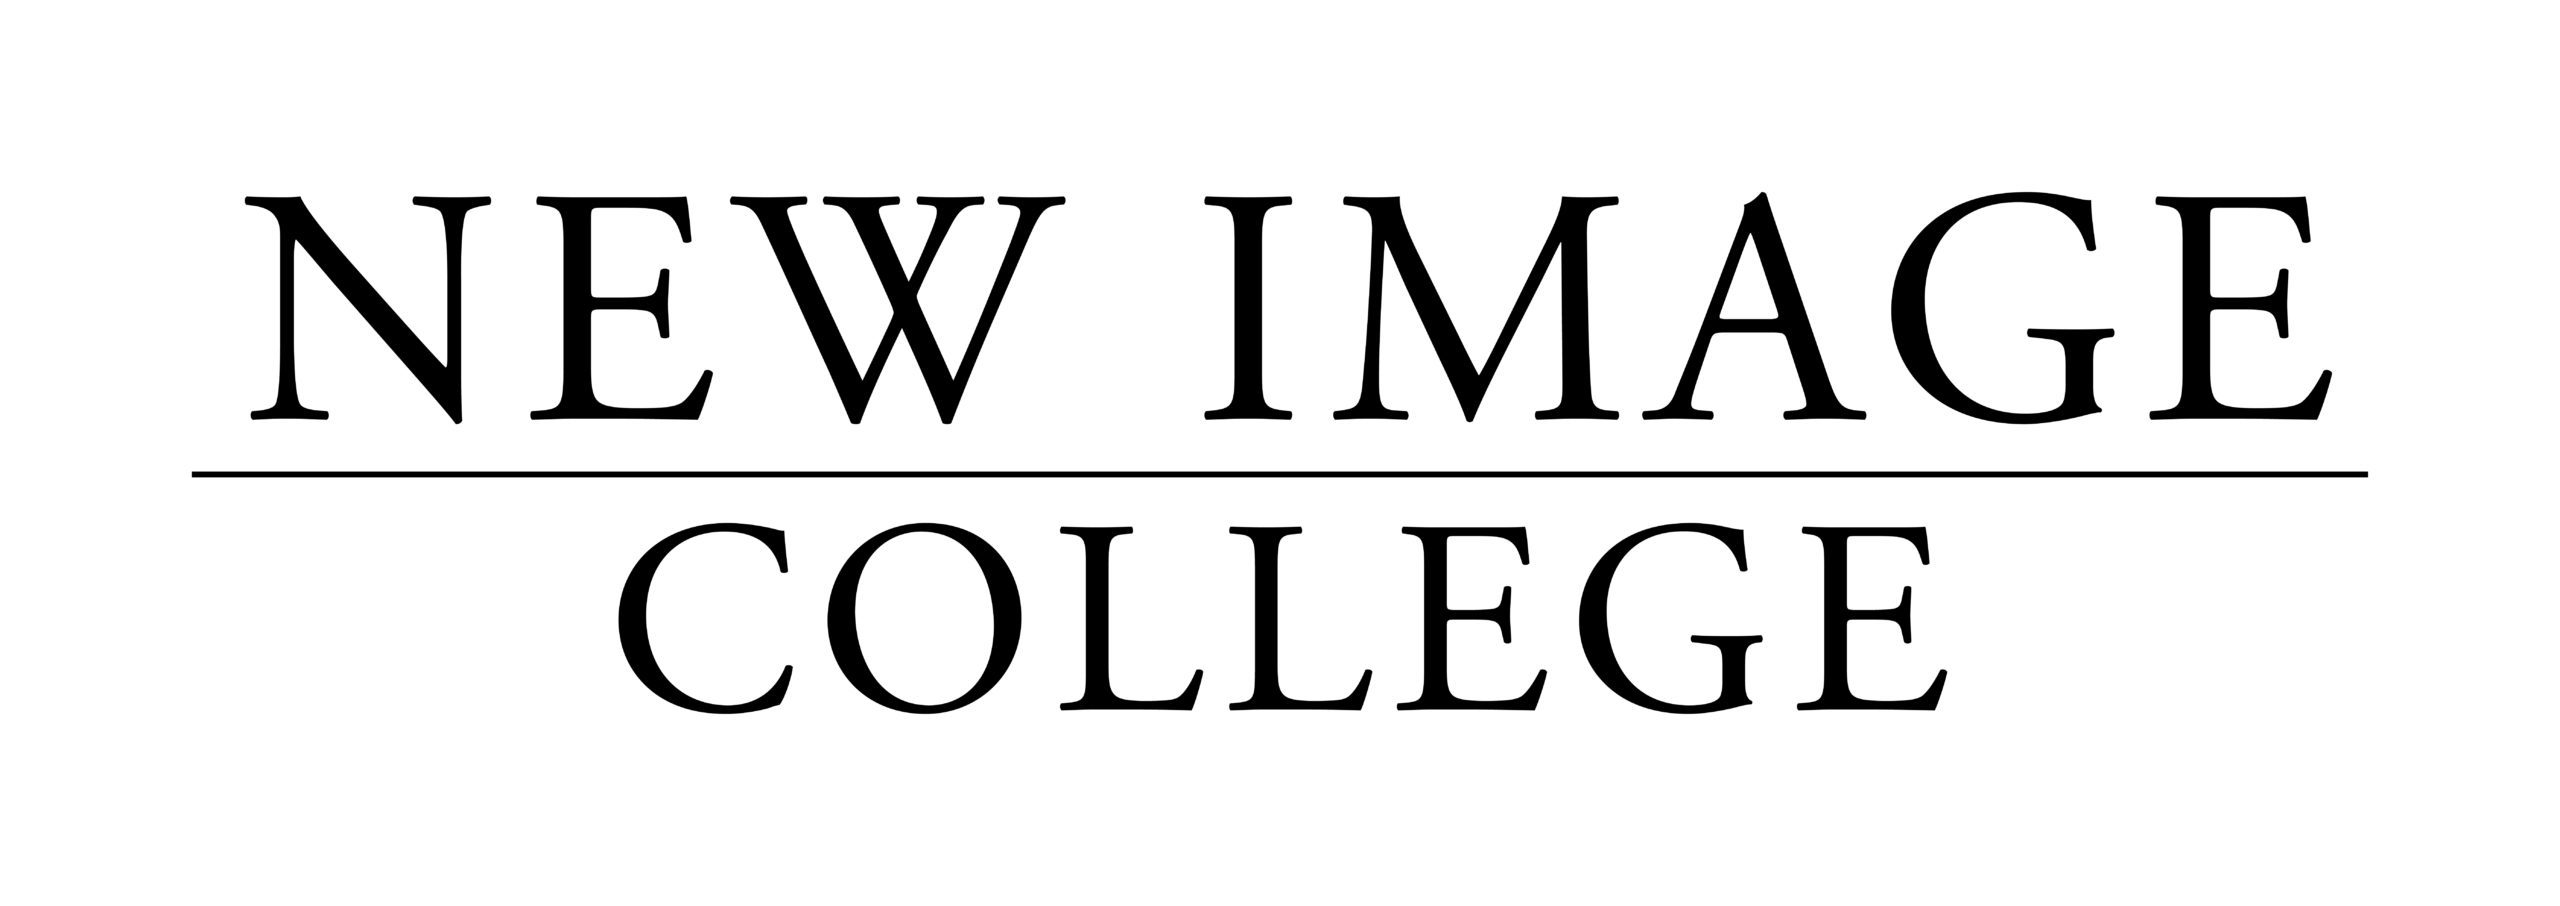 New Image College